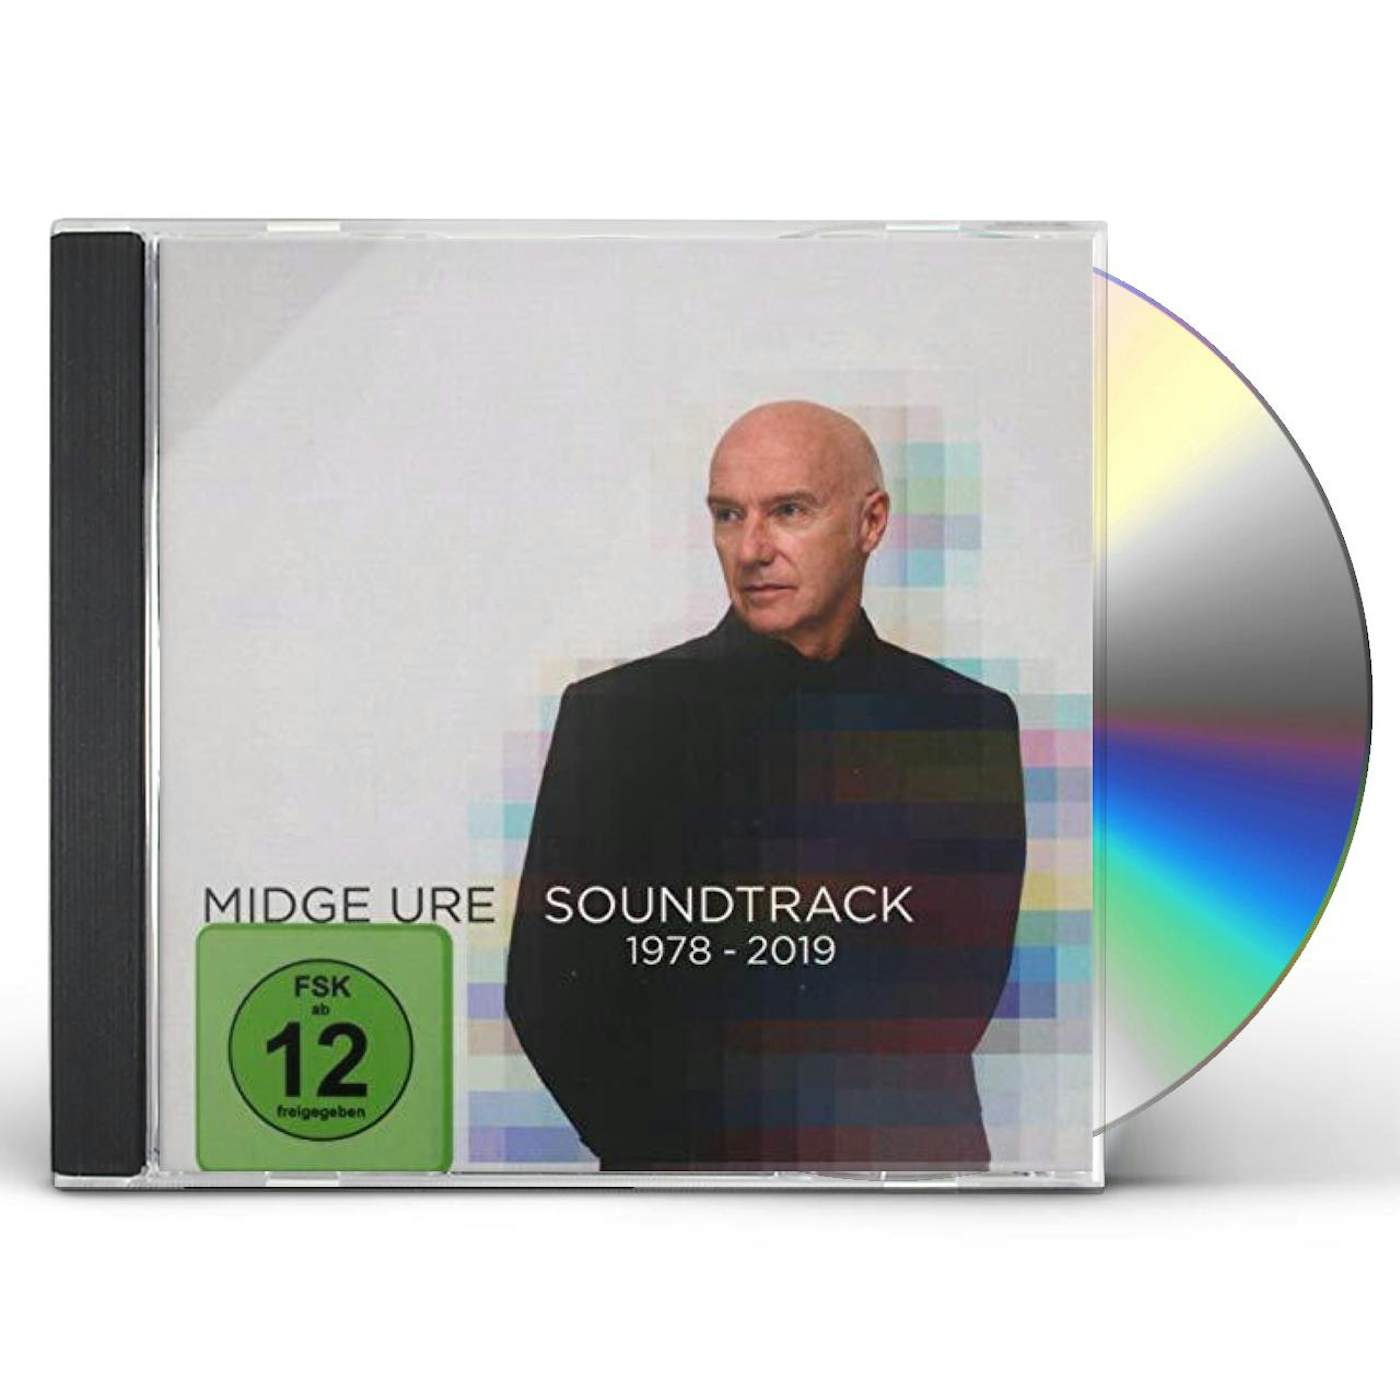 Midge Ure Soundtrack 1978-2019 cd CD